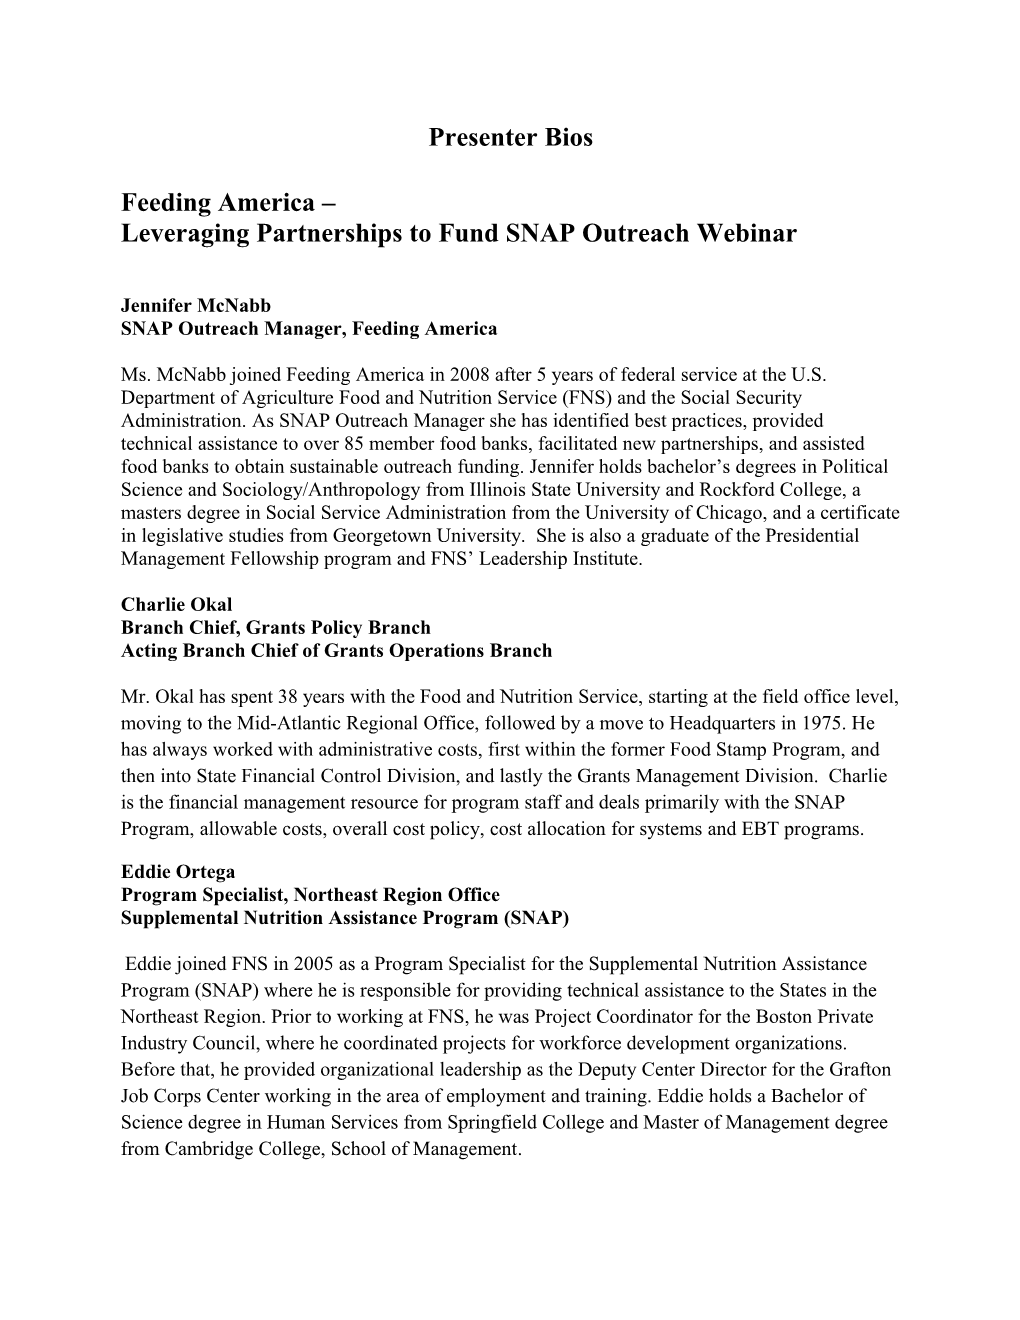 Webinar: Feeding America Leveraging Partnerships to Fund SNAP Outreach